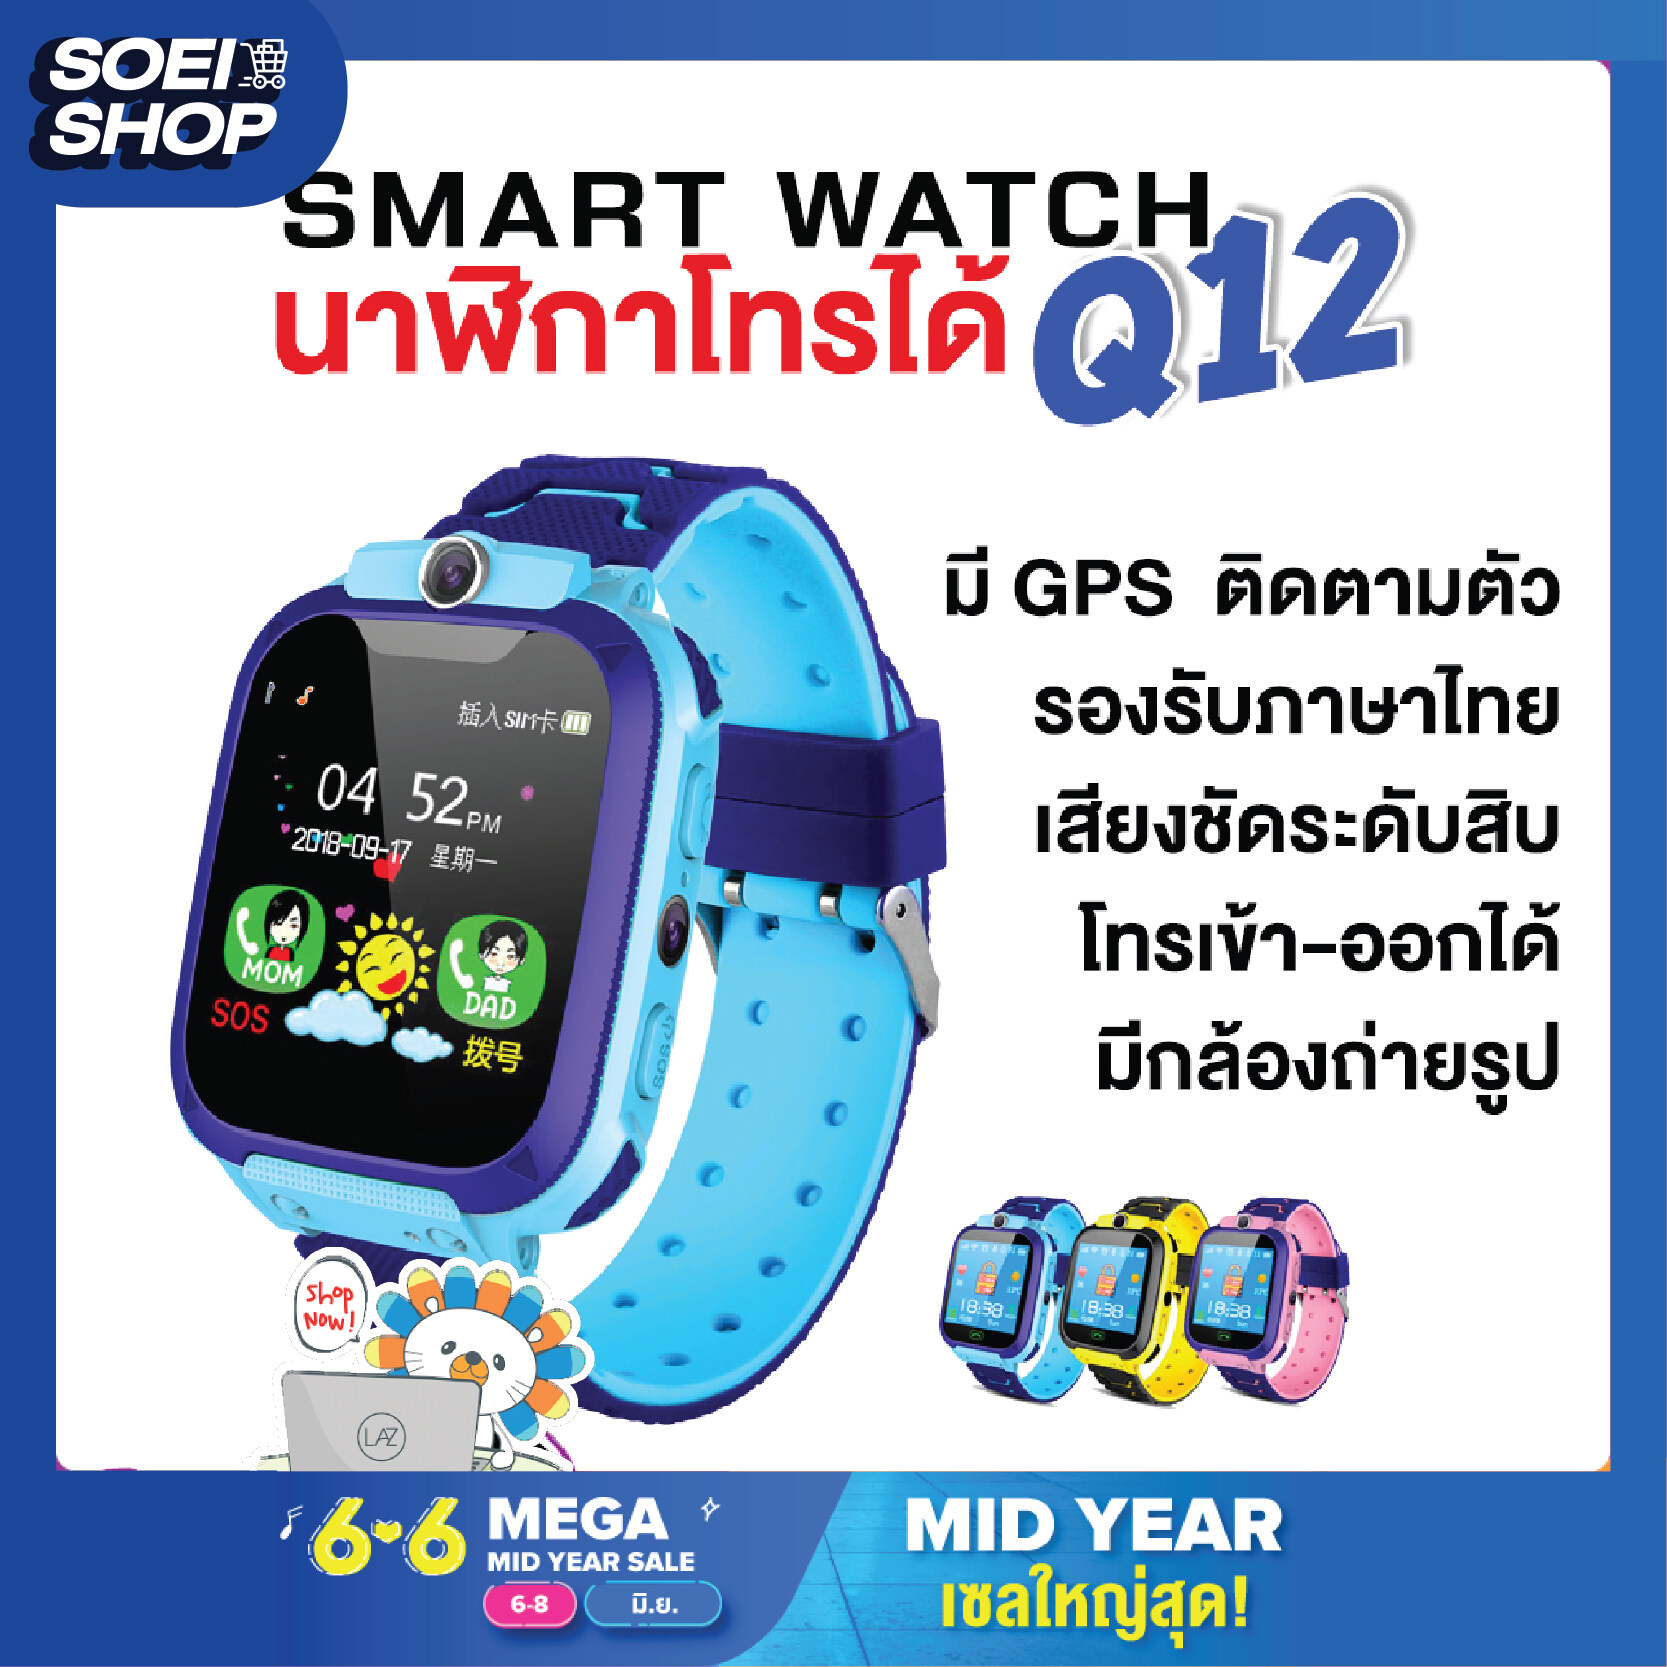 [SOEI SHOP] ถูกที่สุด! นาฬิกา Q12/Q12B ใส่ซิมได้ นาฬิกาเด็ก นาฬิกาข้อมือเด็ก smart watch Q12 สมาร์ทวอท์ชสำรับเด็ก นาฬิกาอัจฉริยะ ป้องกันเด็กหาย ติดตามGPSได้ สมารทวอช กันน้ำ IP67 บลูทูธ มีกล้อง โทรเข้า-ออกได้ นาฬิกาไอโม่ (มีประกัน) รองรับซิม 2G+